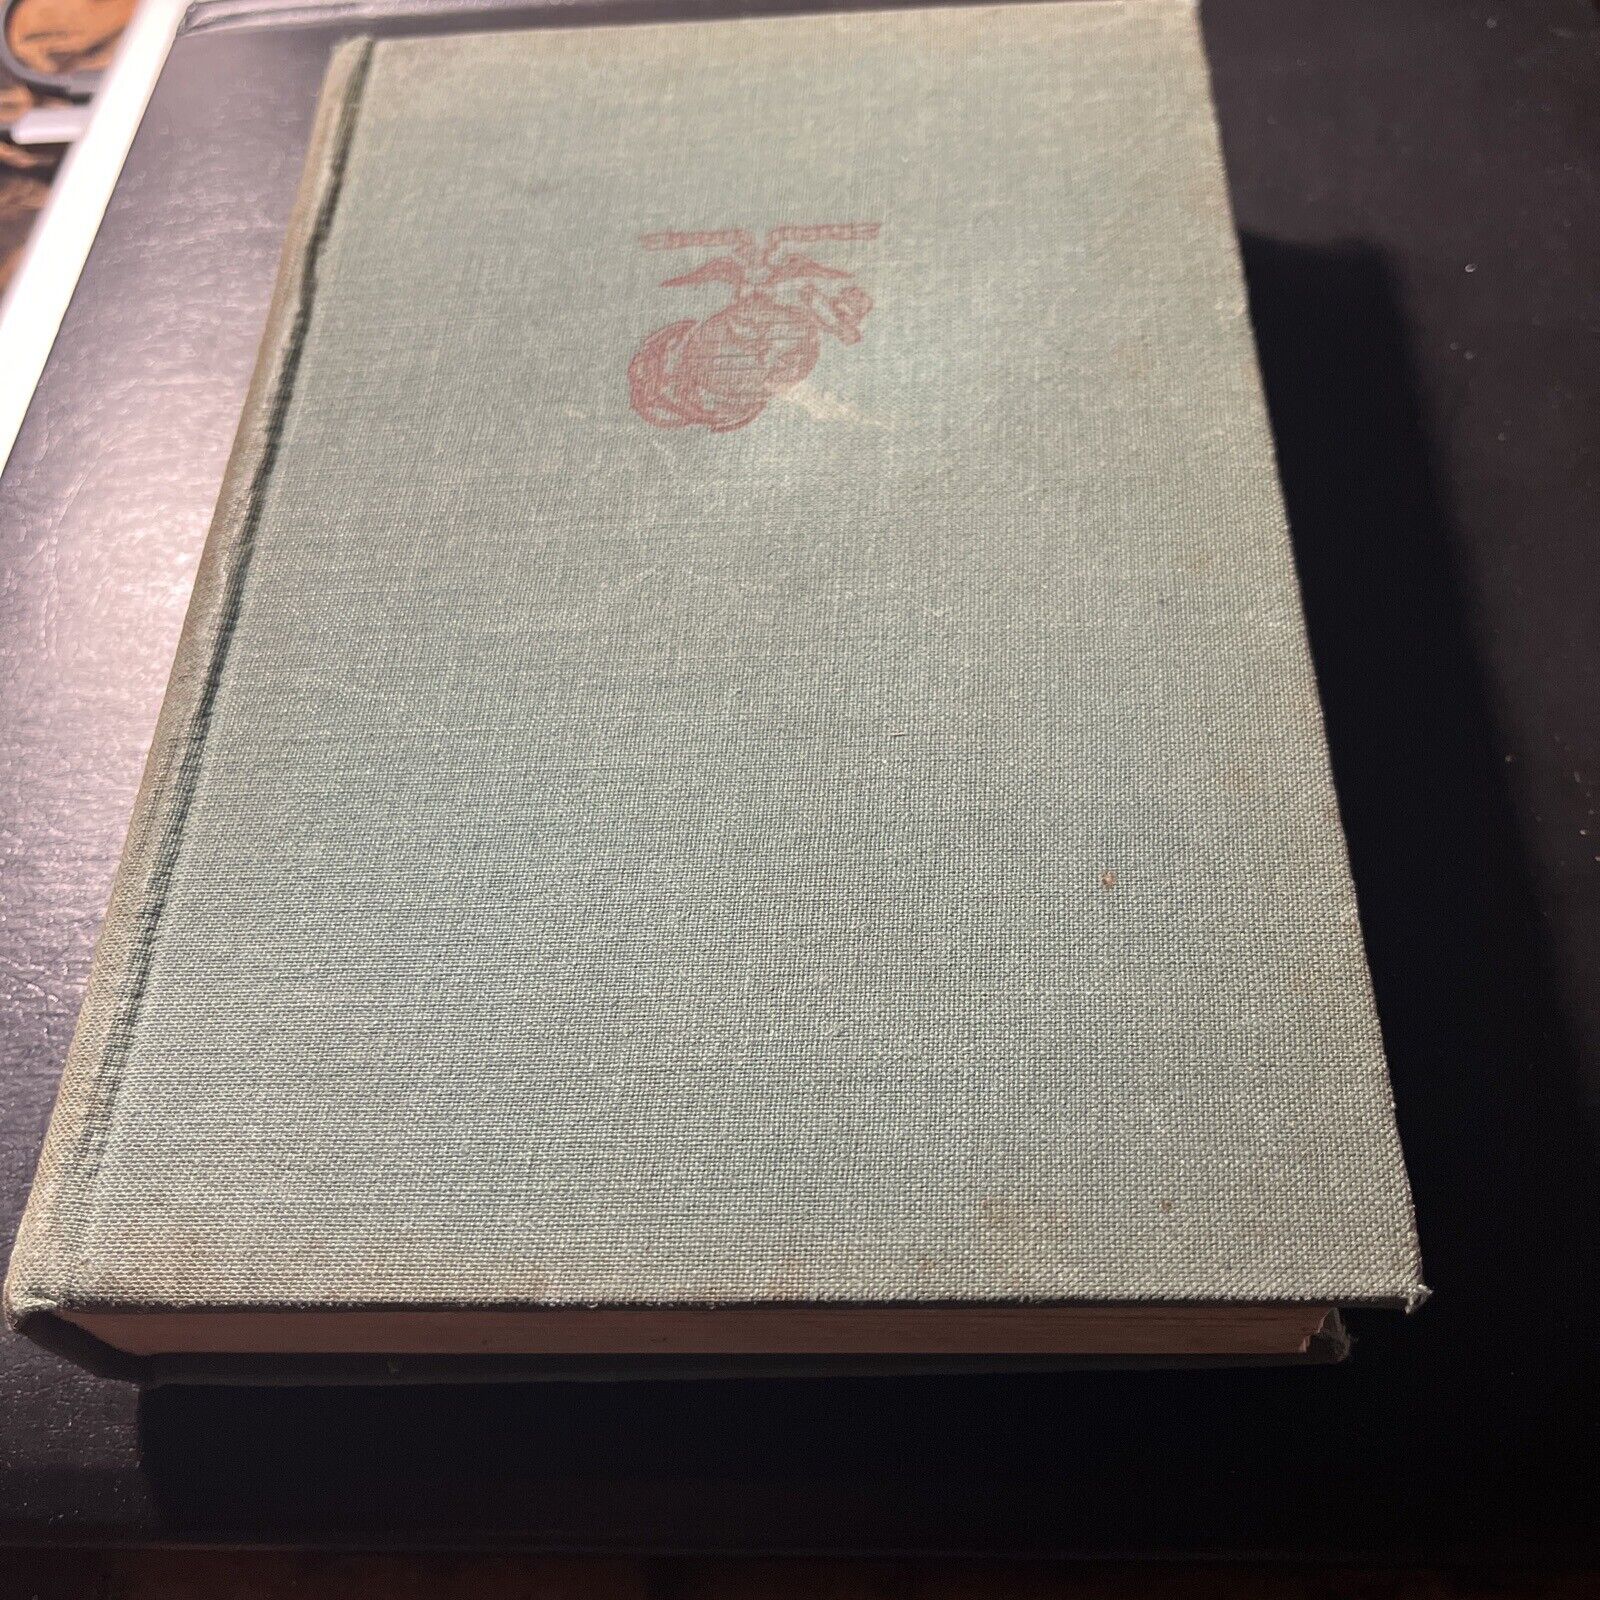 Guadalcanal Diary By Richard Tregaskis 1943 Edition 1st Printing No D/C Rare